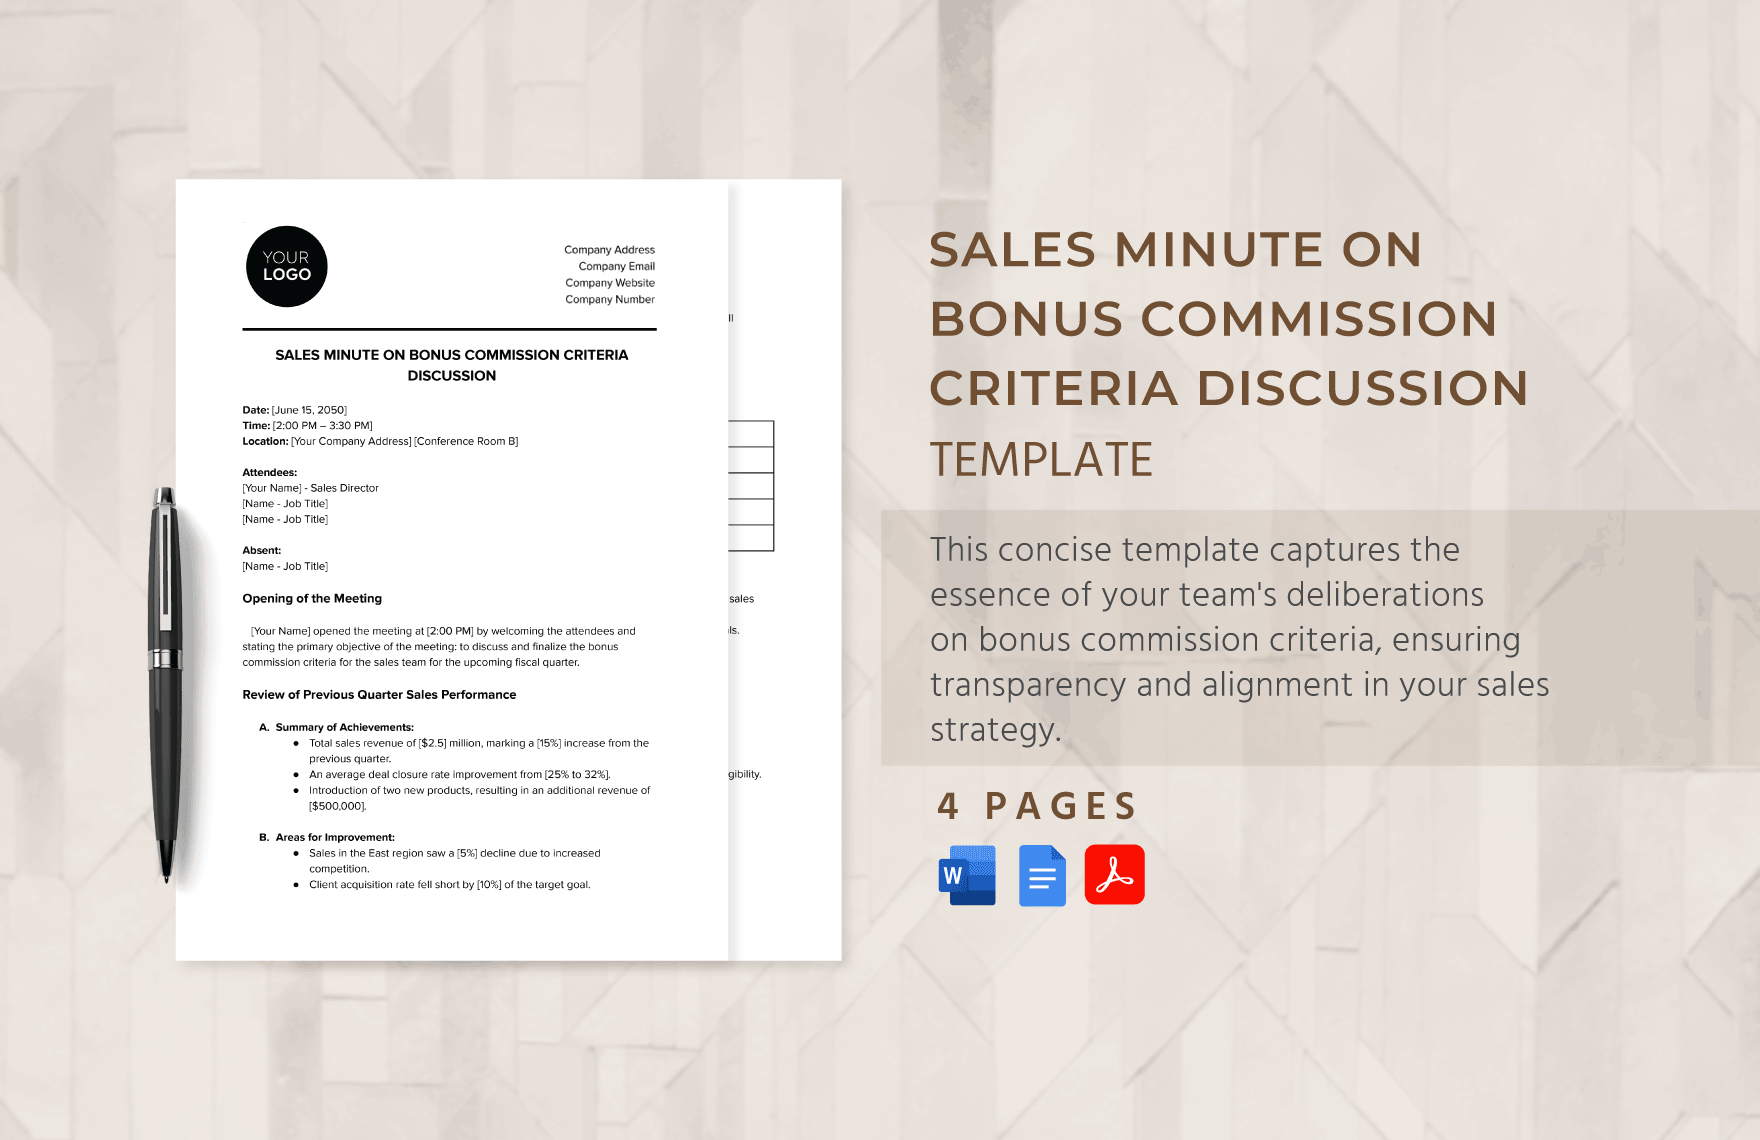 Sales Minute on Bonus Commission Criteria Discussion Template